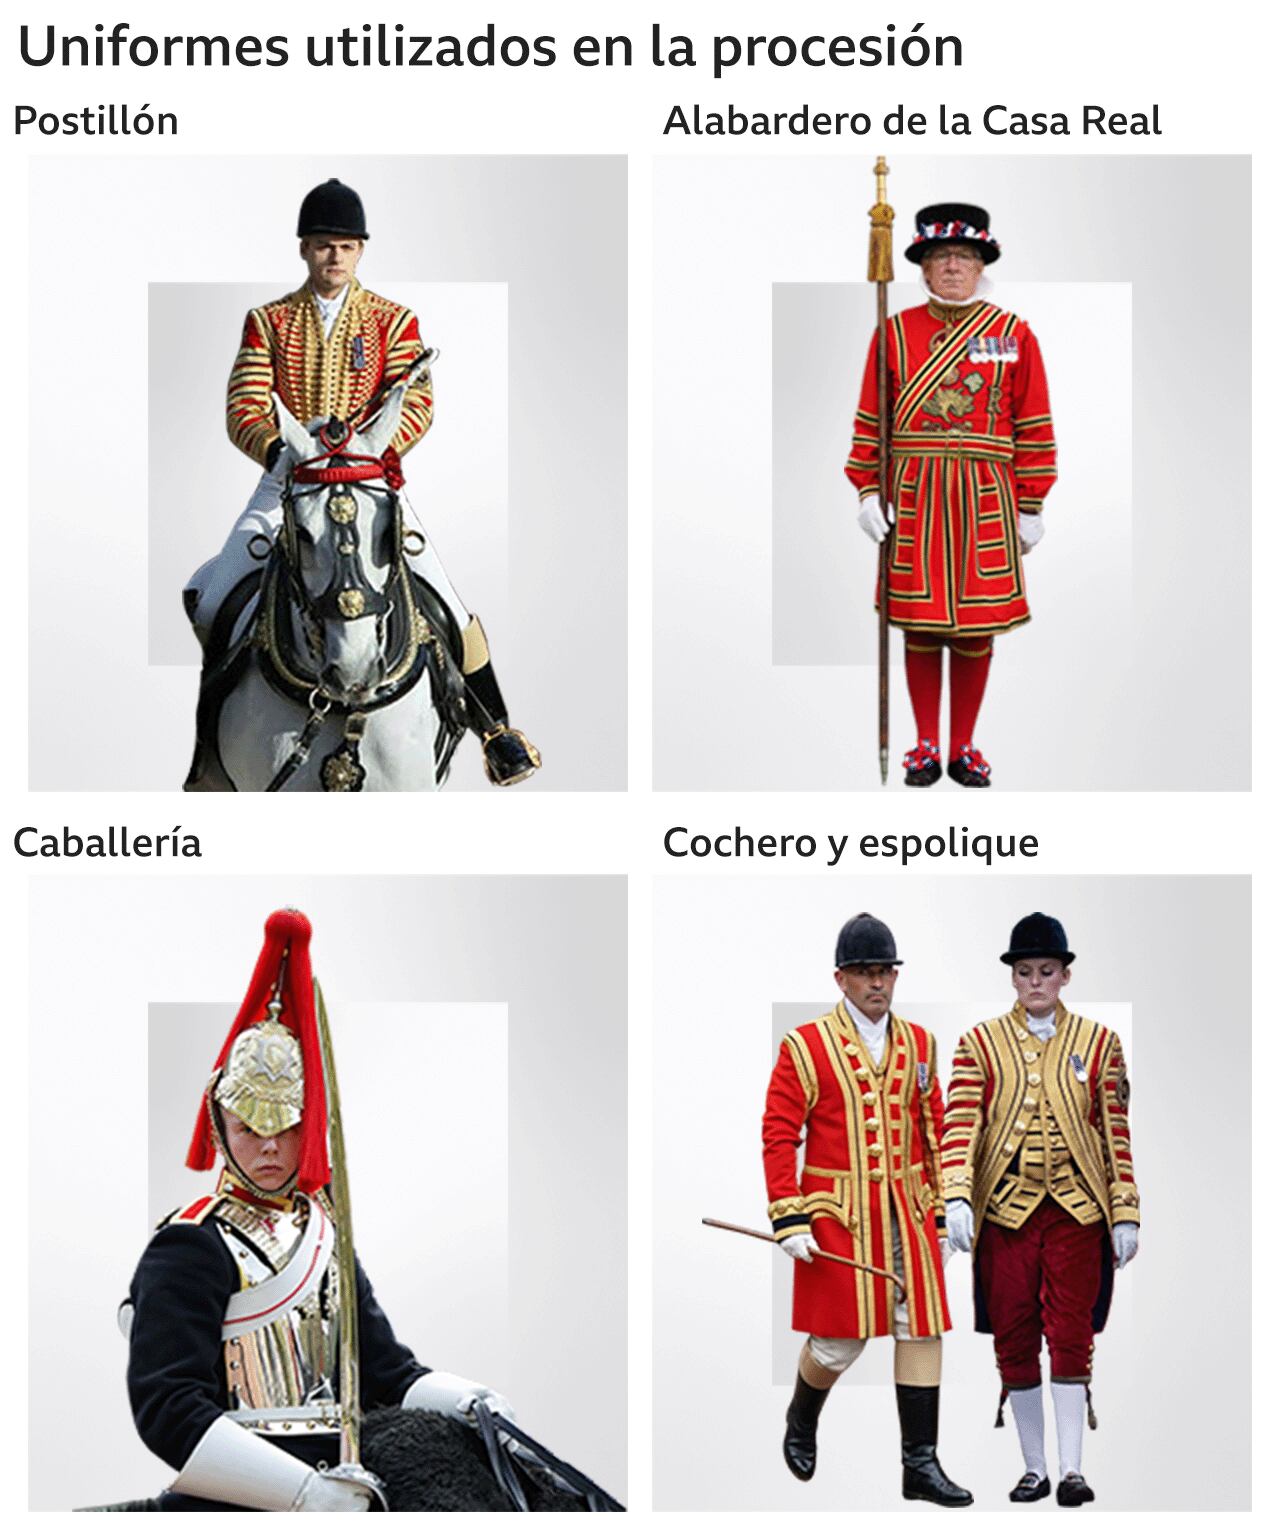 Royal Guard uniforms.